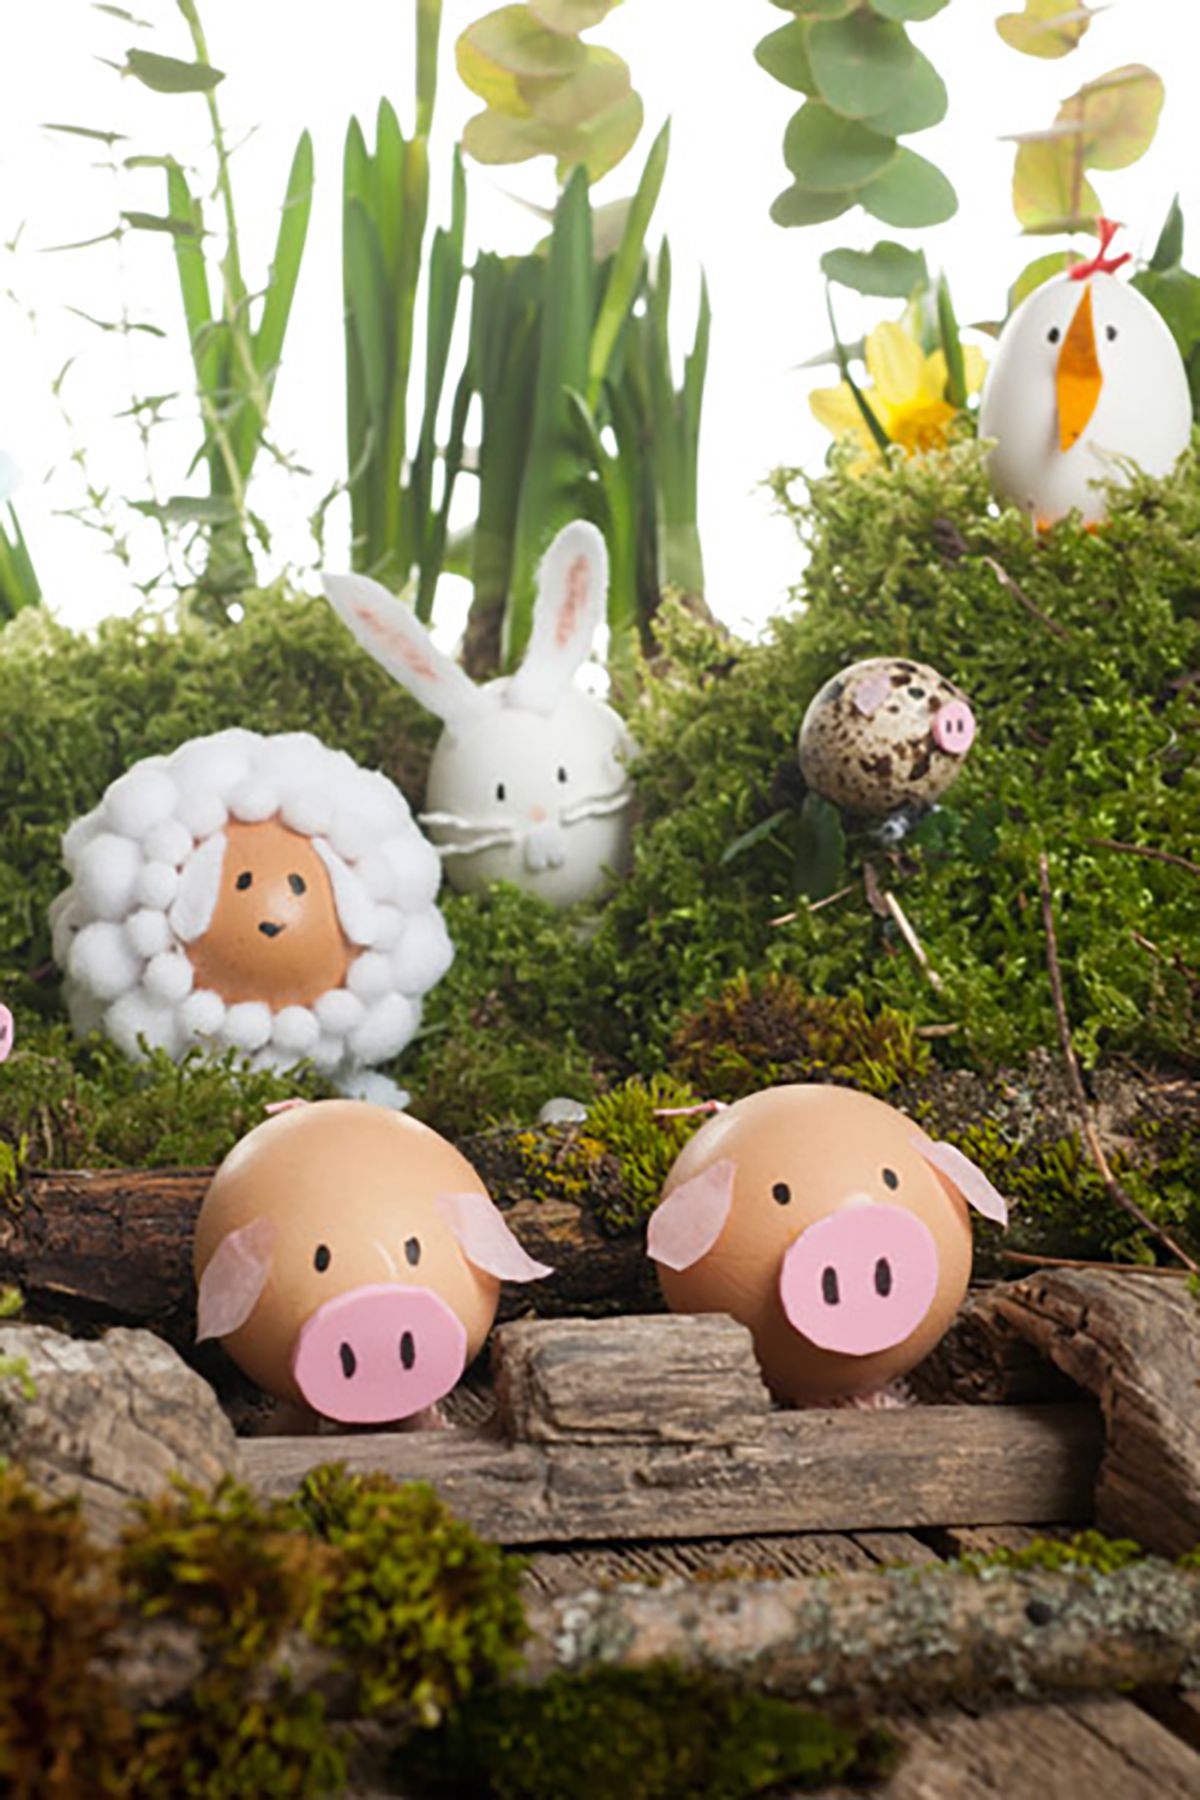 60+ Fun Easter Egg Designs - Creative Ideas for Easter Egg ...